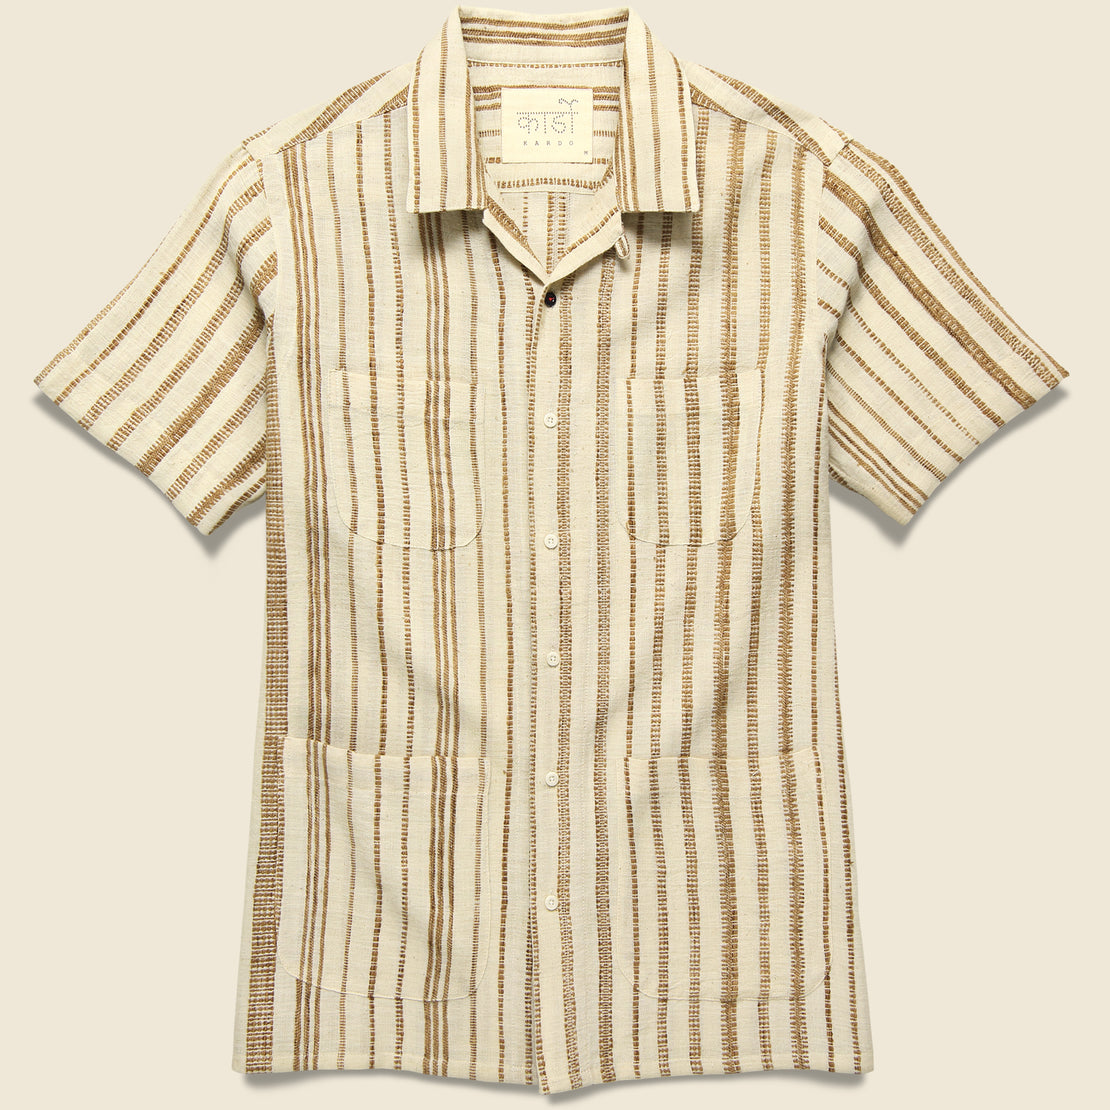 Kardo Alfred Handwoven Striped Guayabera Shirt - Natural/Tan